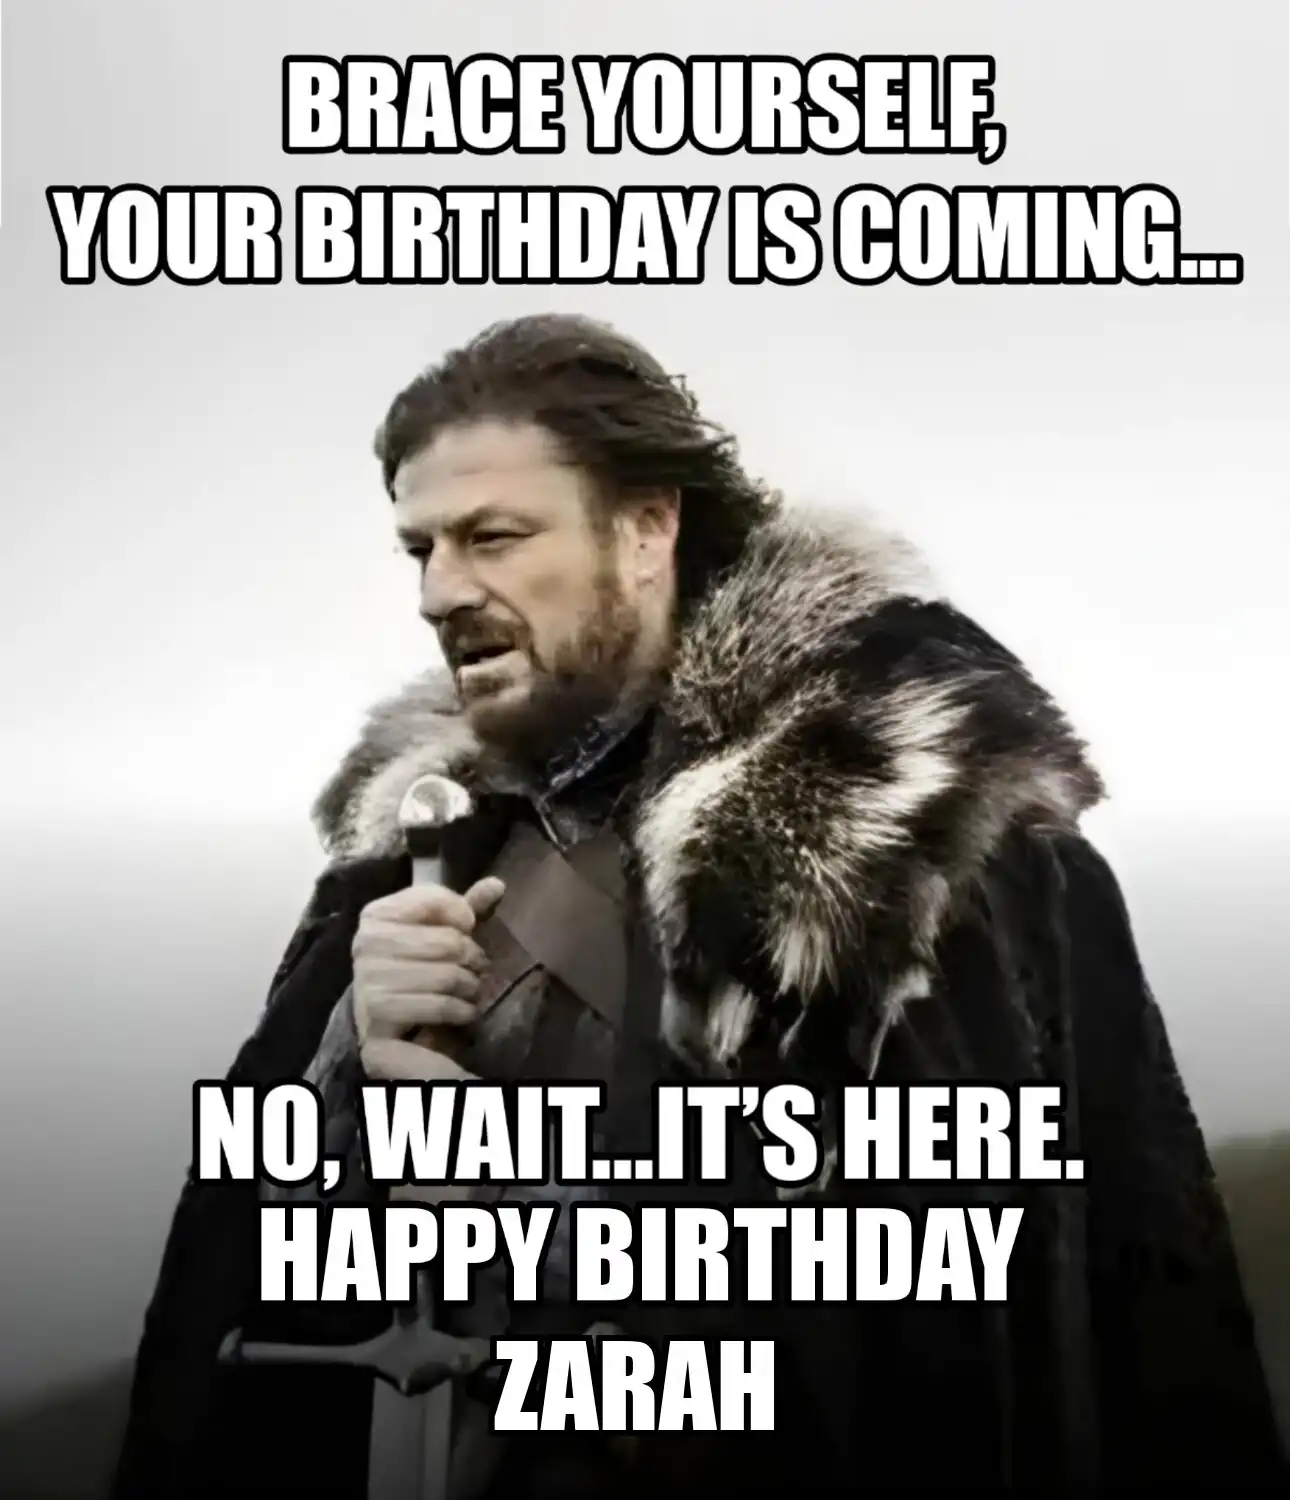 Happy Birthday Zarah Brace Yourself Your Birthday Is Coming Meme